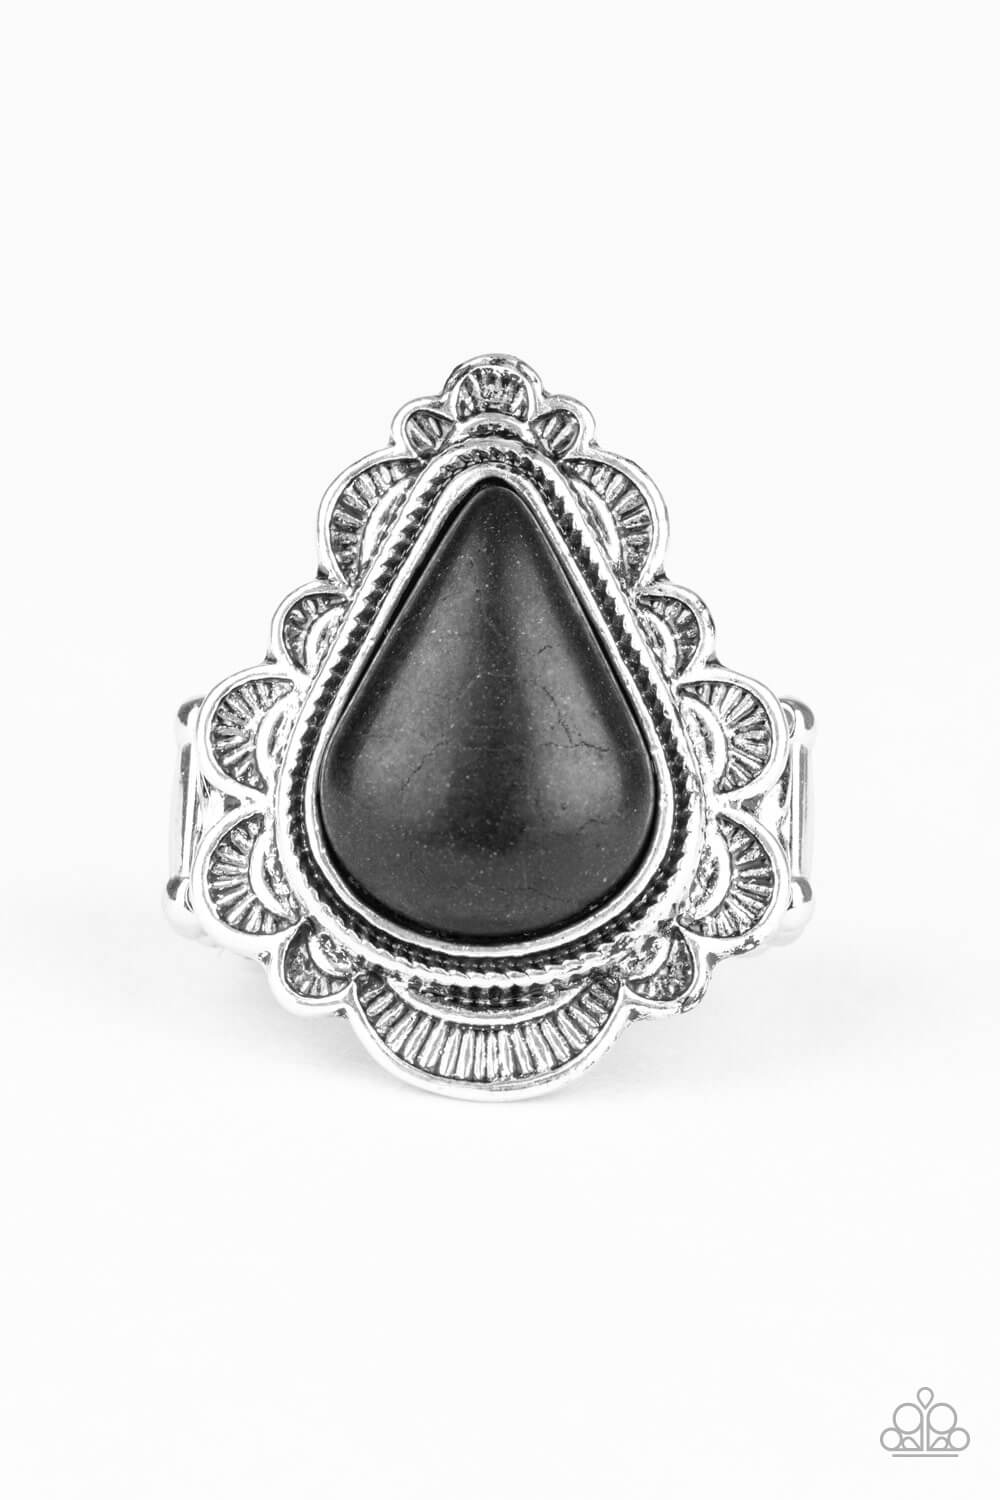 Desert Escape - Black Stone Ring - Princess Glam Shop